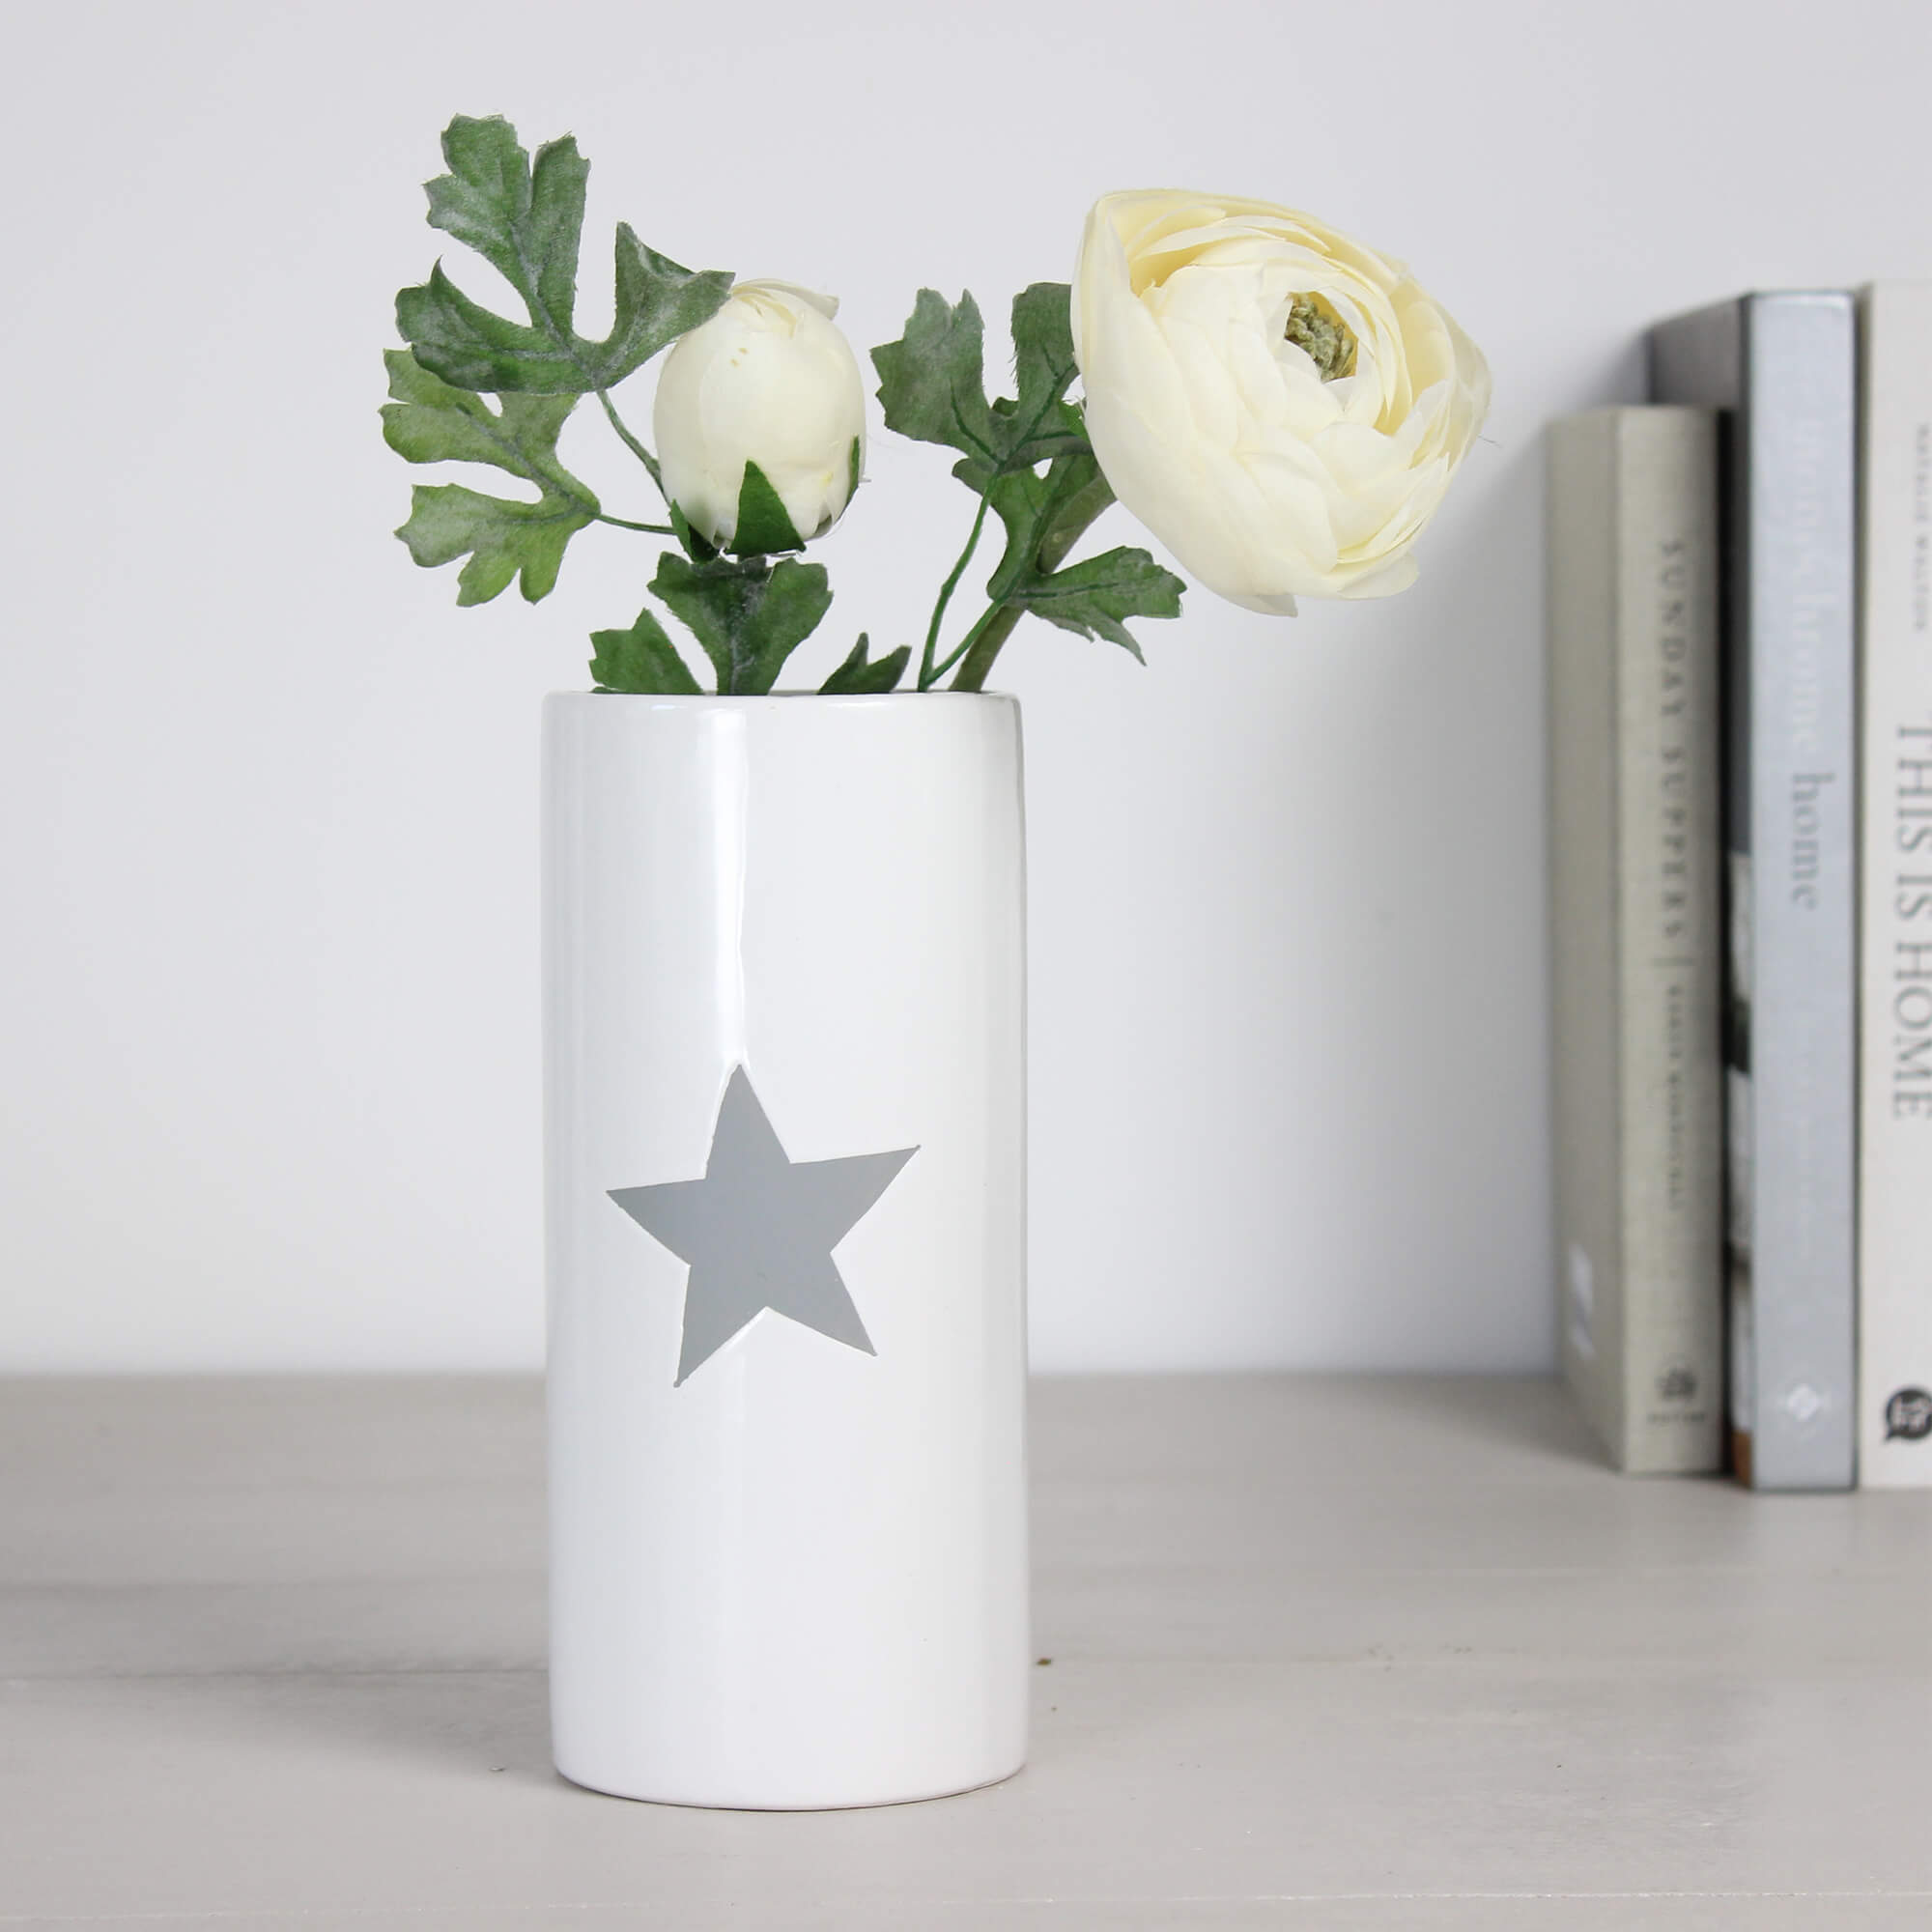 Small White Ceramic Vase with Grey Star